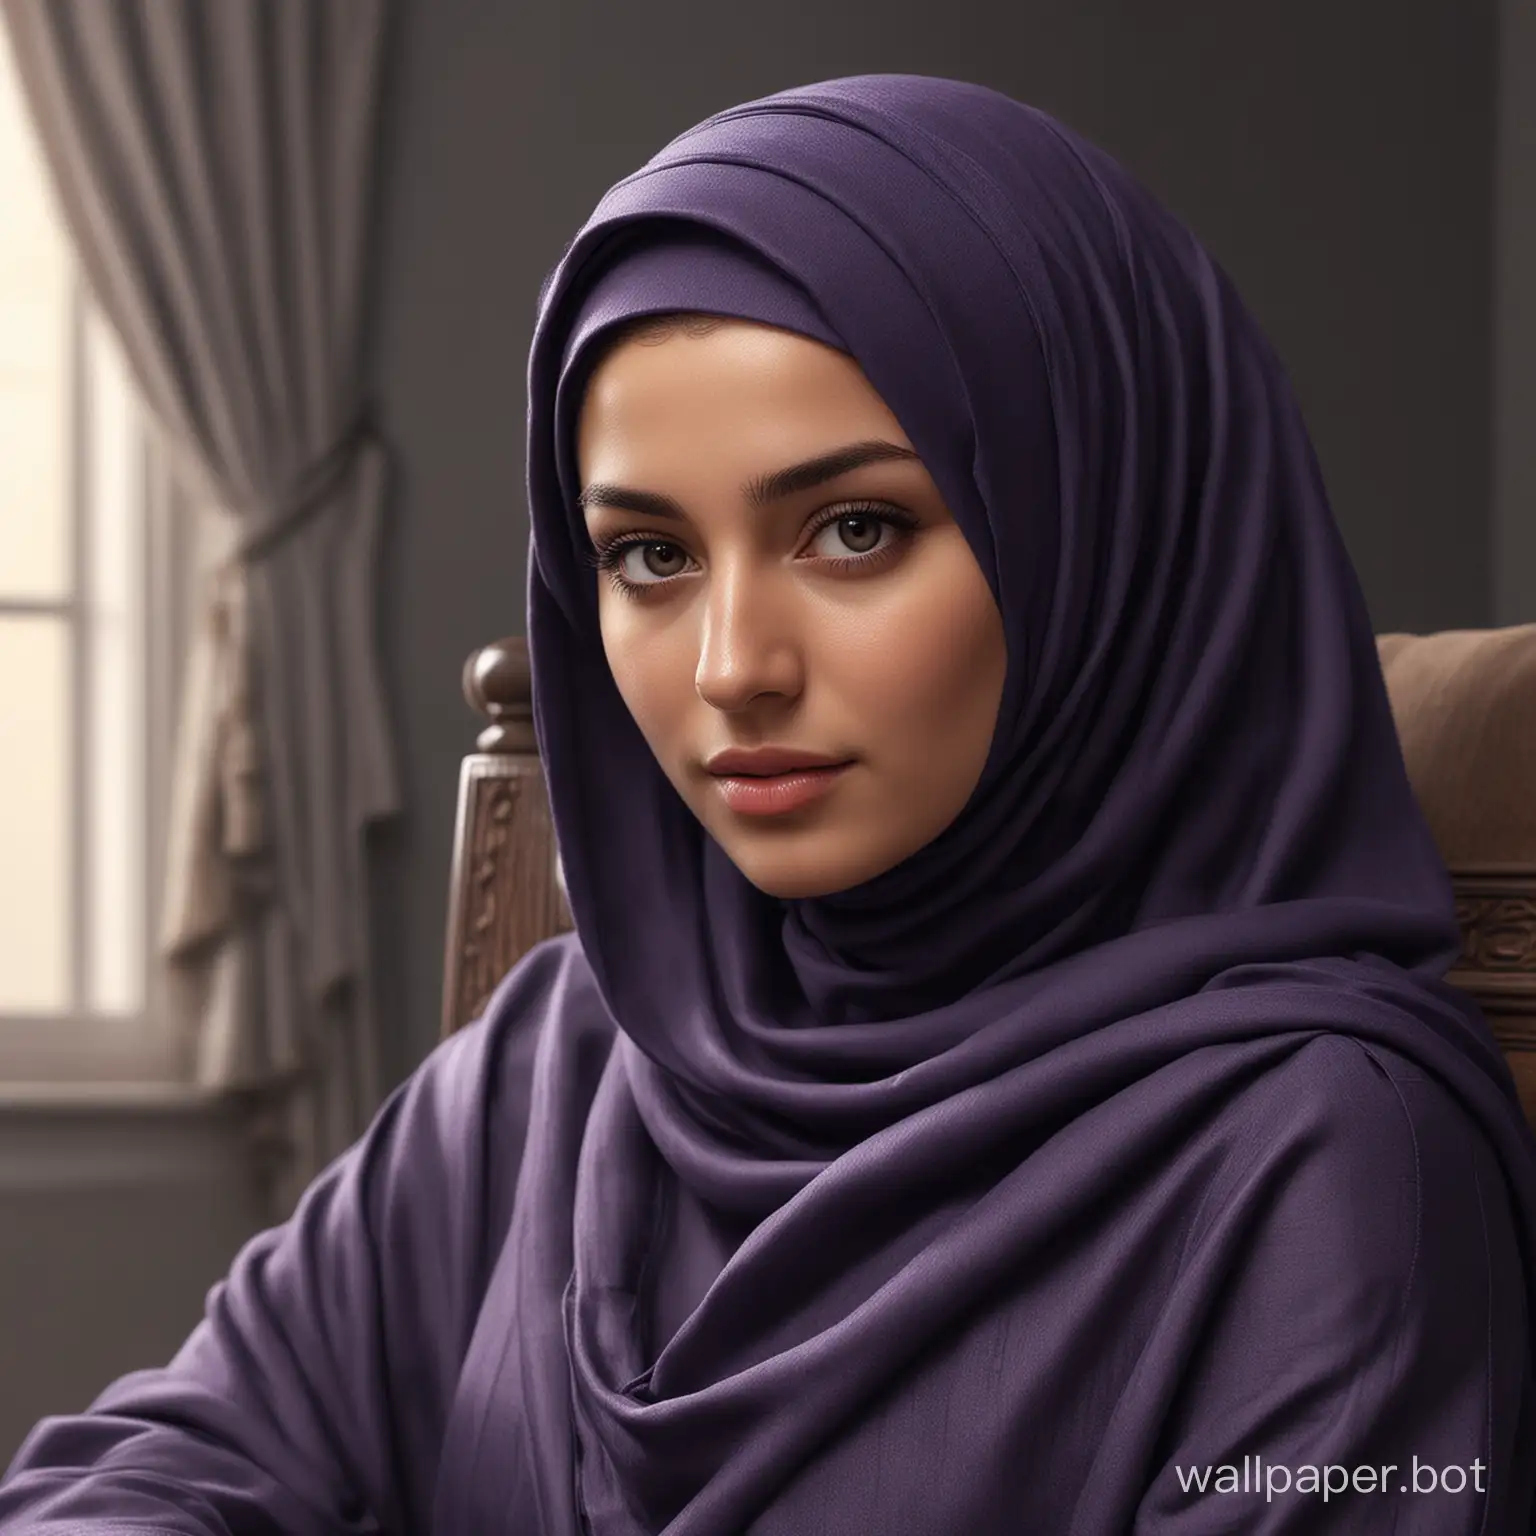 HyperRealistic-Portrait-of-a-Veiled-24YearOld-Woman-in-Dark-Purple-Abaya